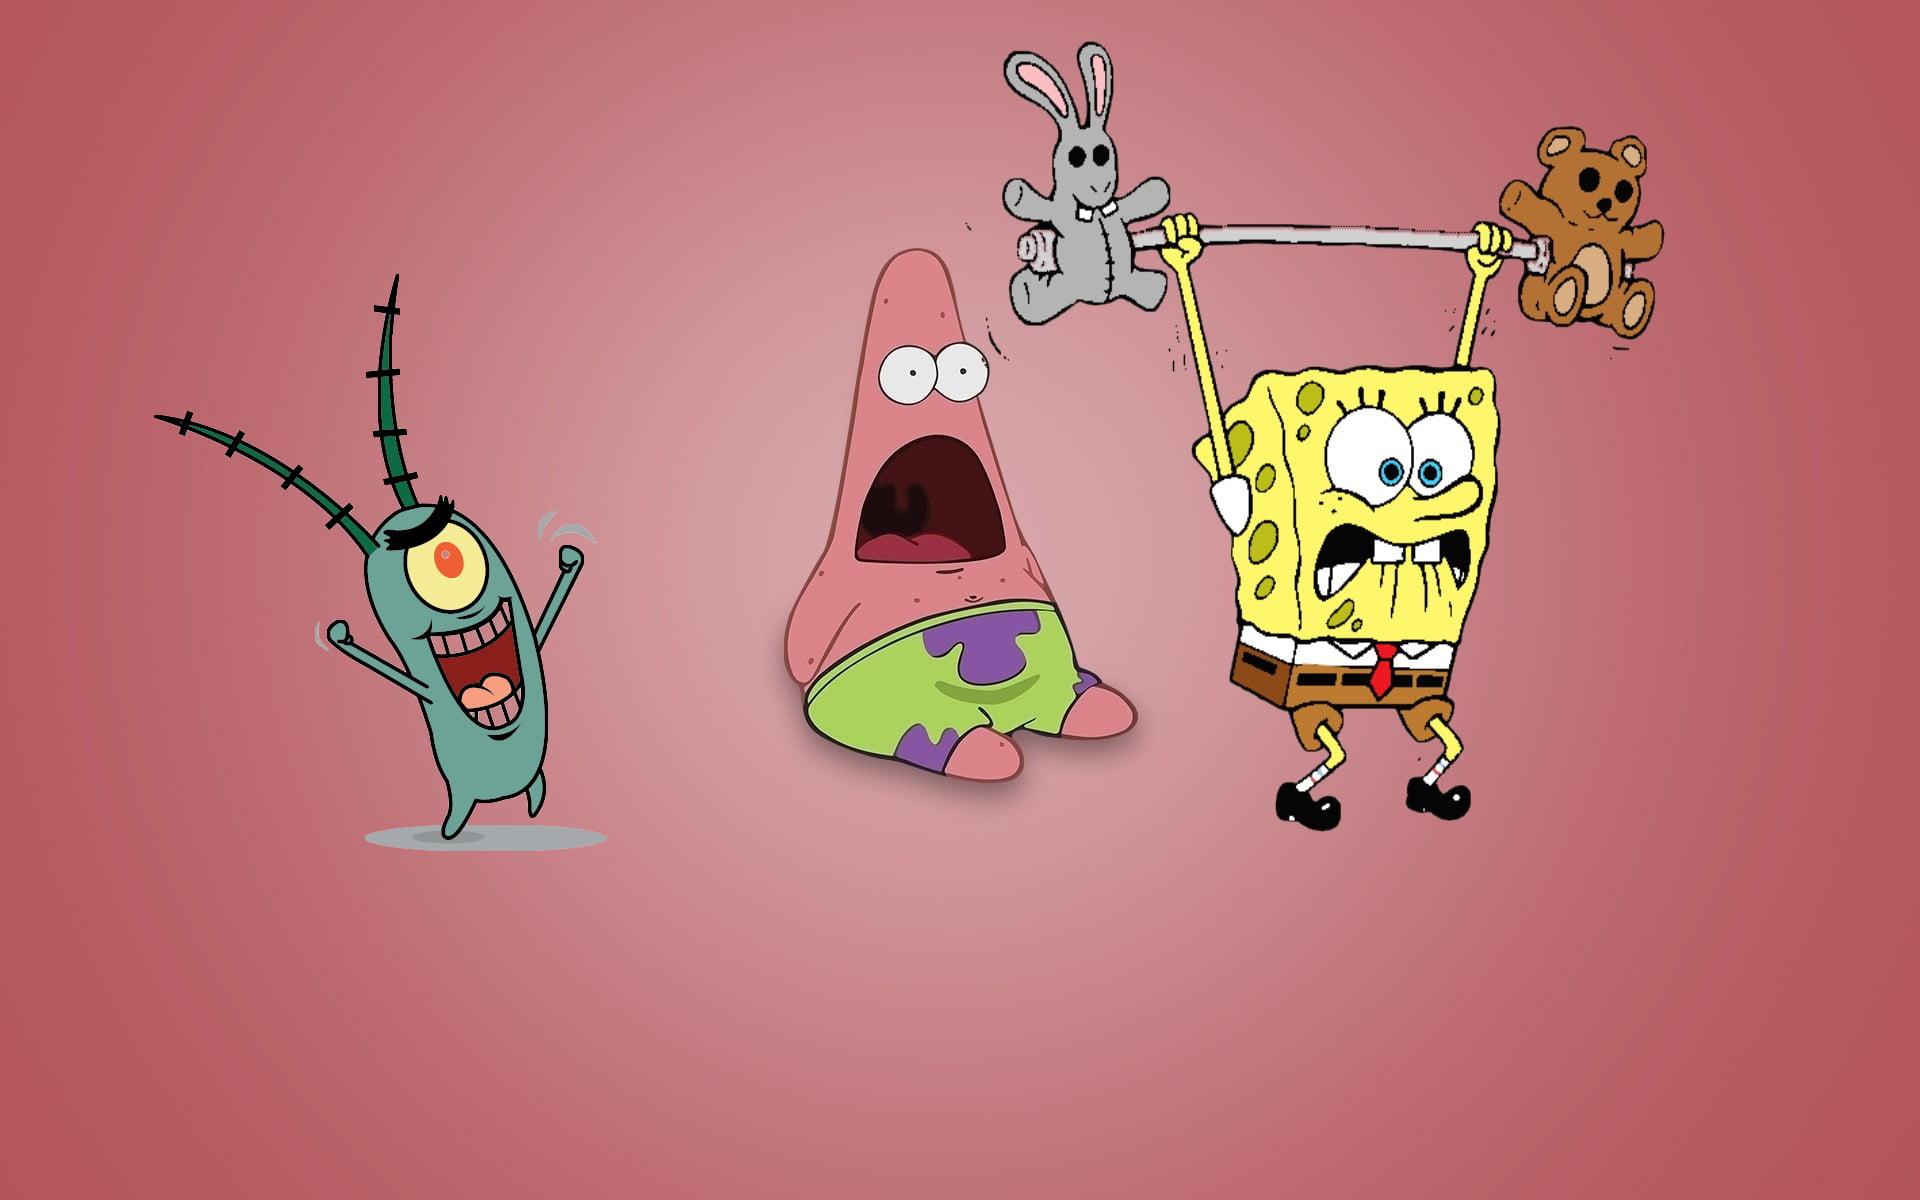 Spongebob Squarepants, Patrick Starfish, and Plankton